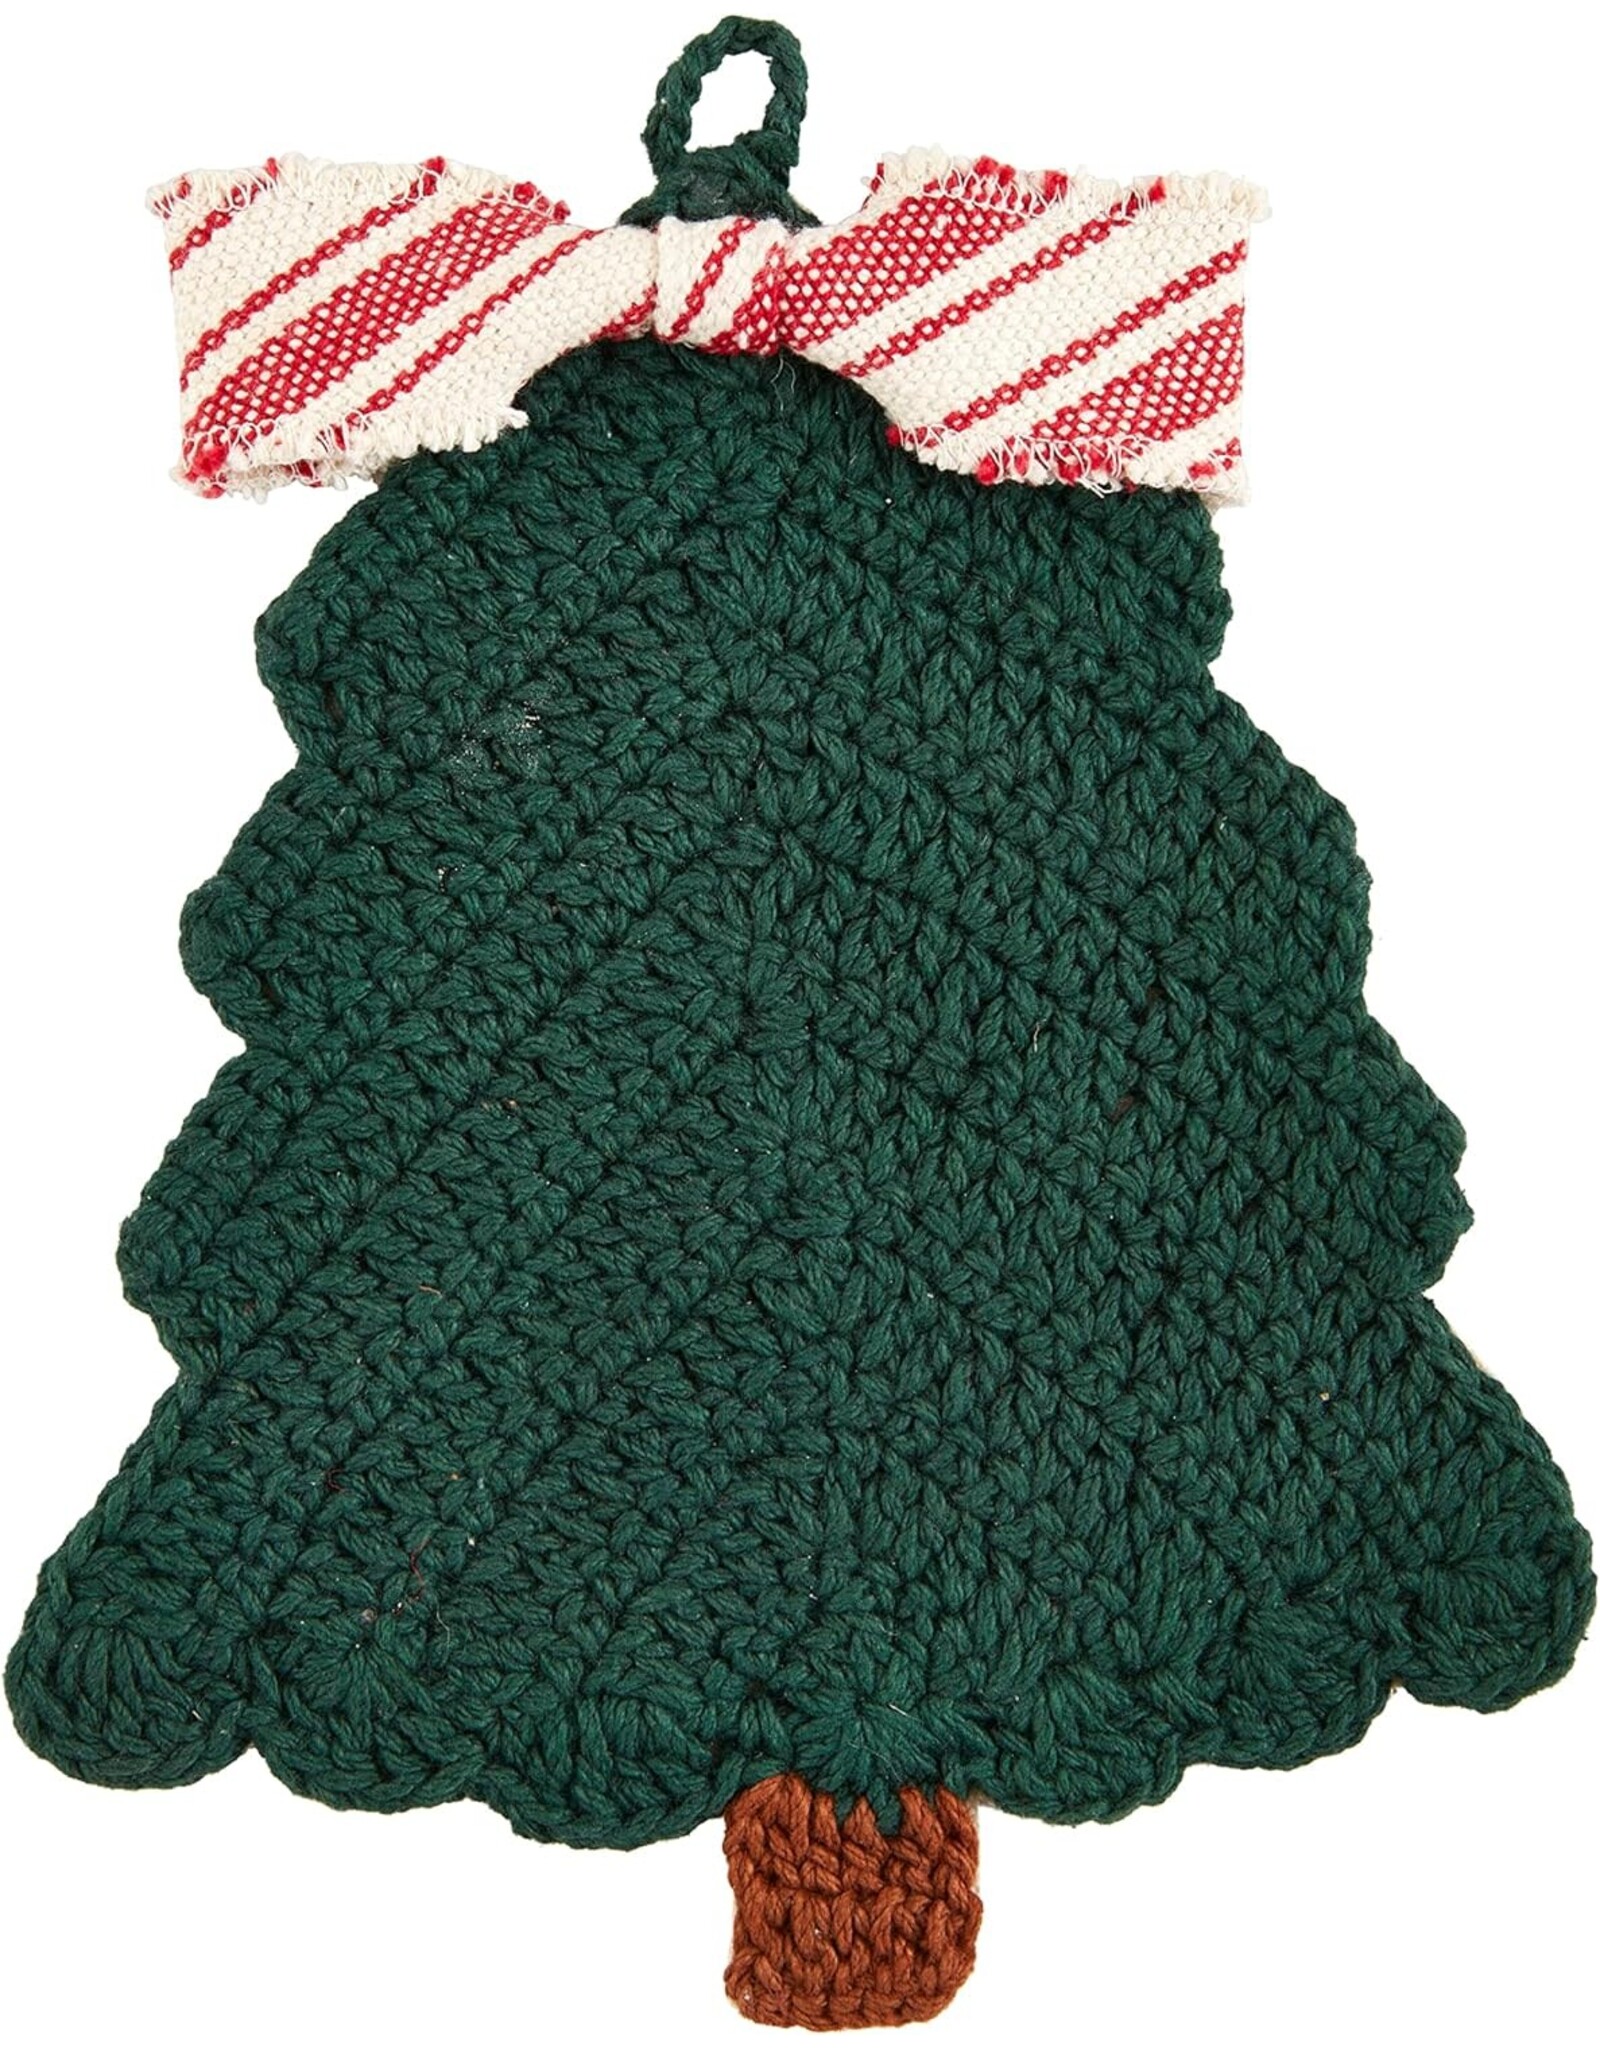 Mud Pie Christmas Pot Holders Crochet Christmas Tree Pot Holder